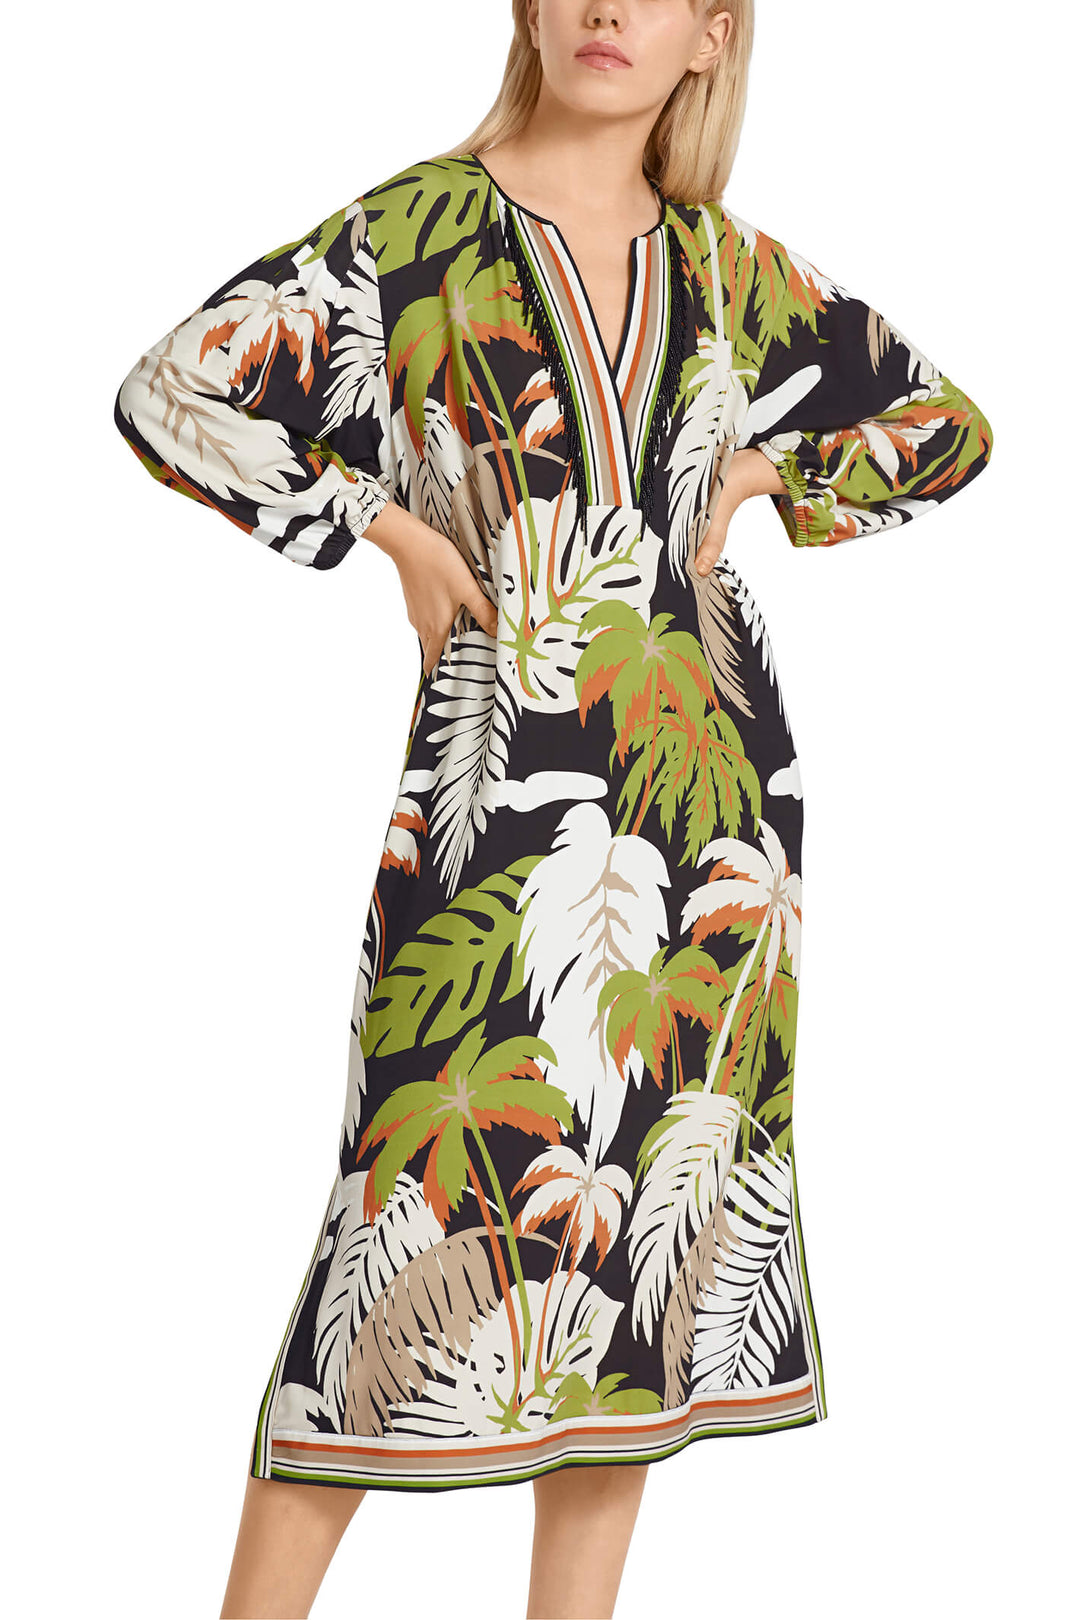 Marc Cain Collection UC 21.31 J68 Deep Olive Green Palm Print Dress - Olivia Grace Fashion